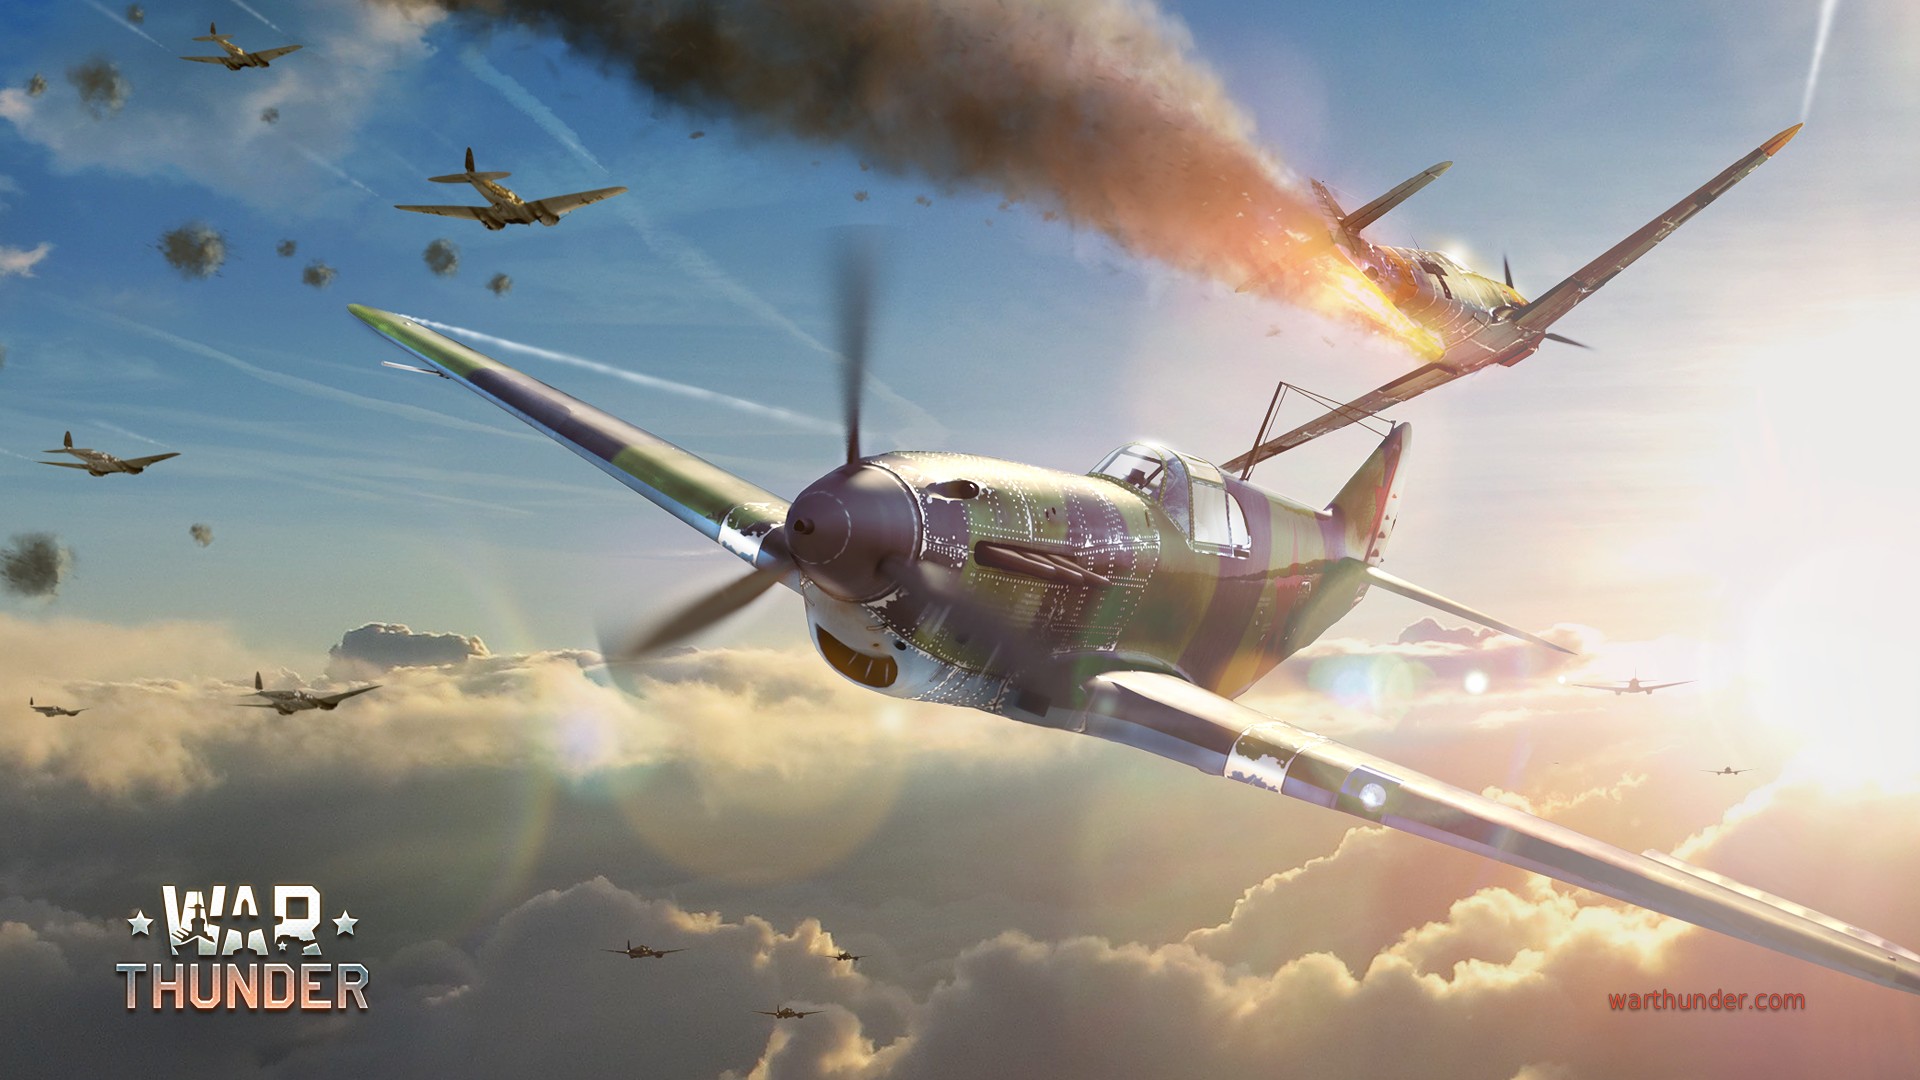 General 1920x1080 War Thunder airplane Gaijin Entertainment video games military aircraft aircraft vehicle military vehicle PC gaming